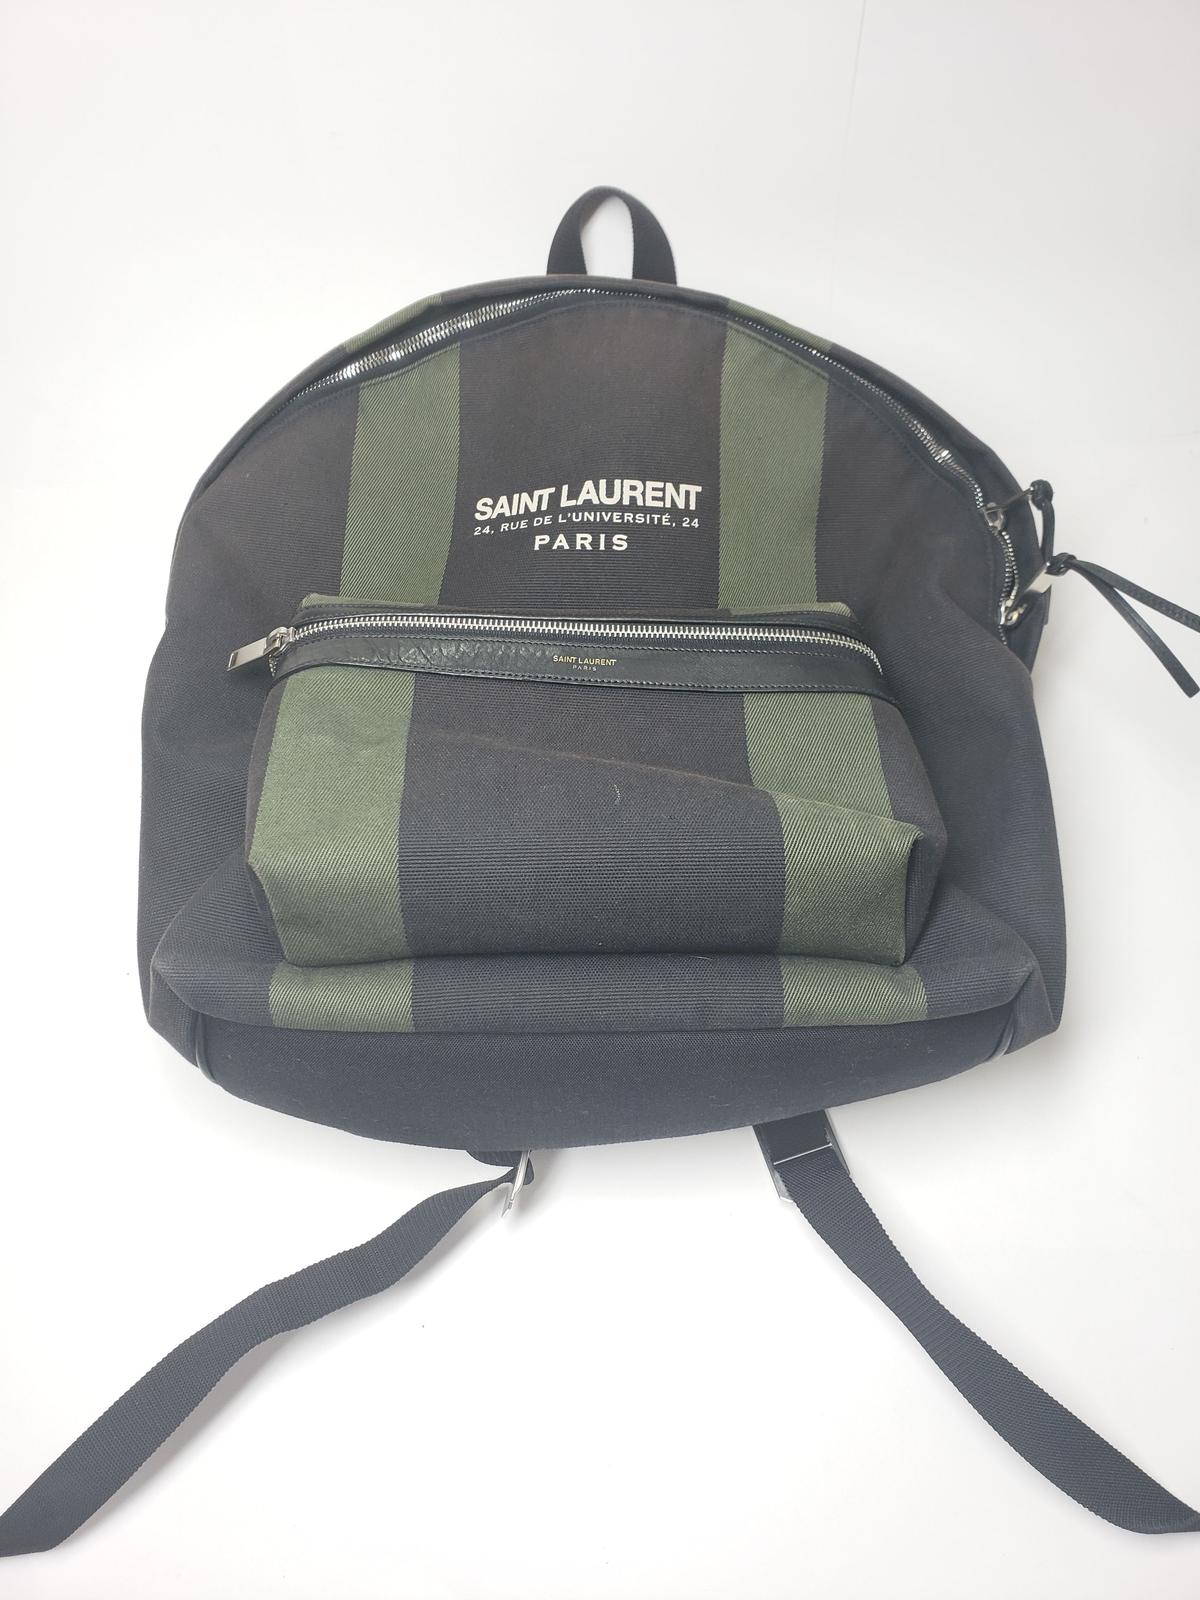 Designer Authentic Saint Laurent Paris Large Backpack